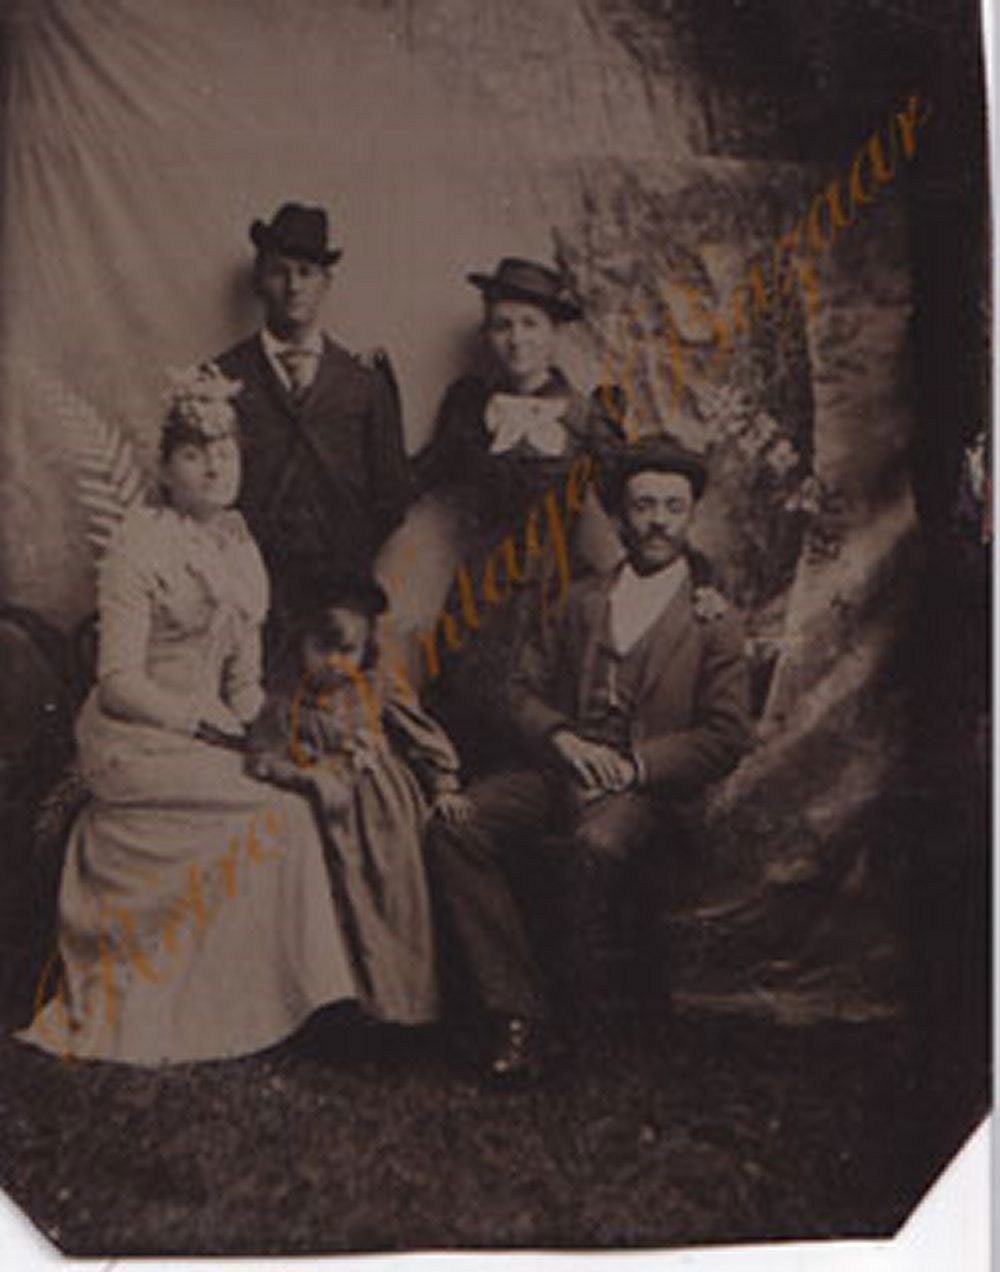 Tintype Photo Circa 1800s Family with Hats